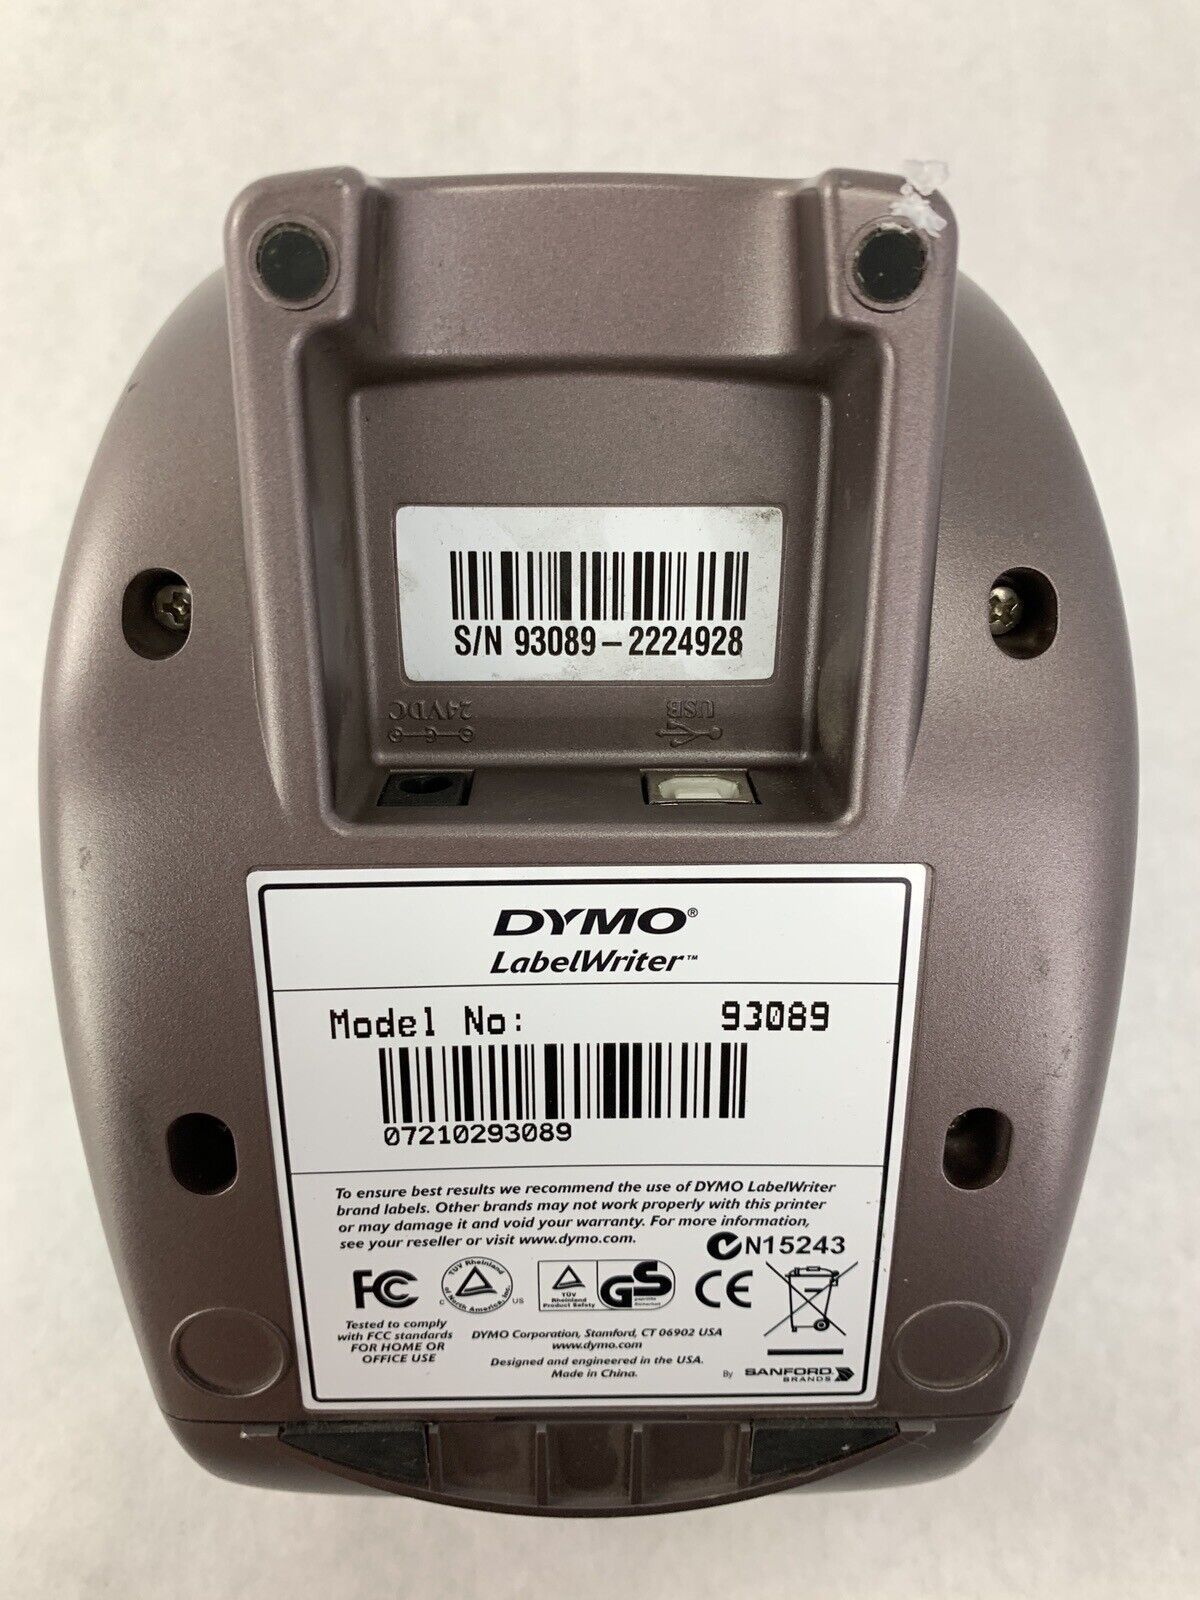 Dymo Labelwriter 400 Thermal Label Printer Model 93089 Parts and Repair